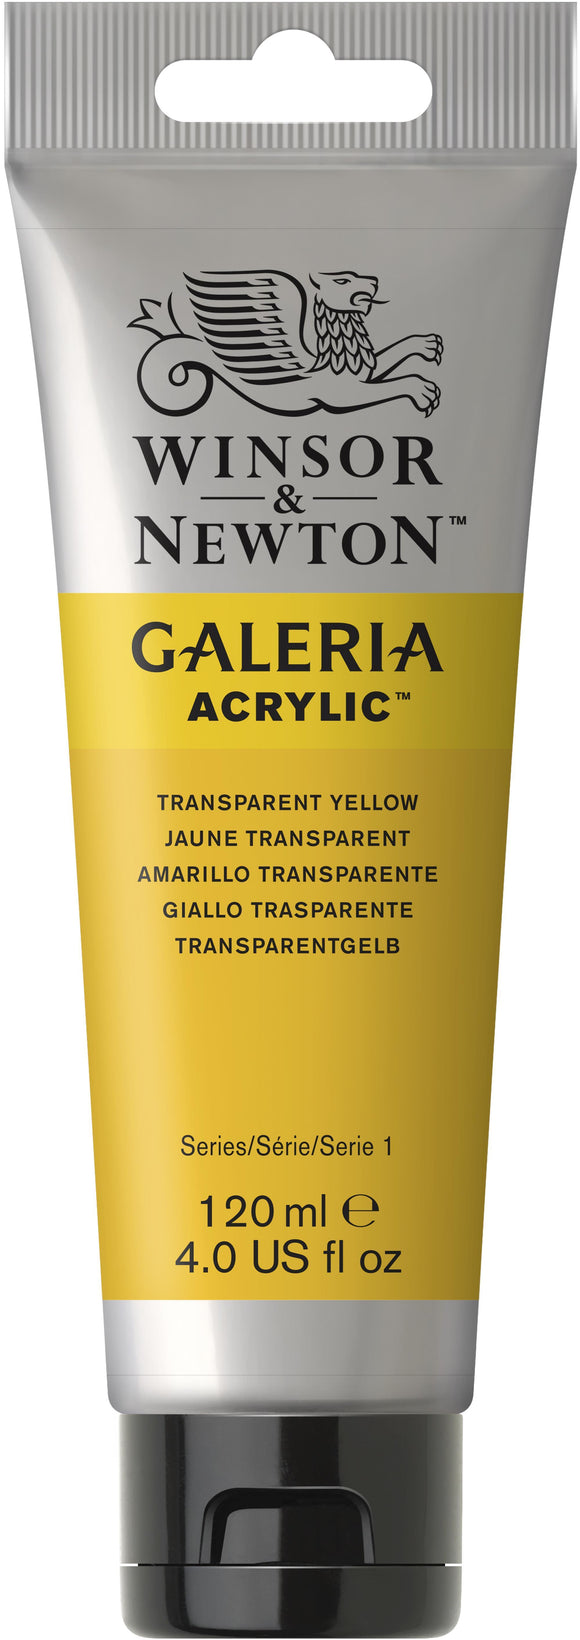 Winsor & Newton Galeria Acrylic Transparent Yellow 120Ml